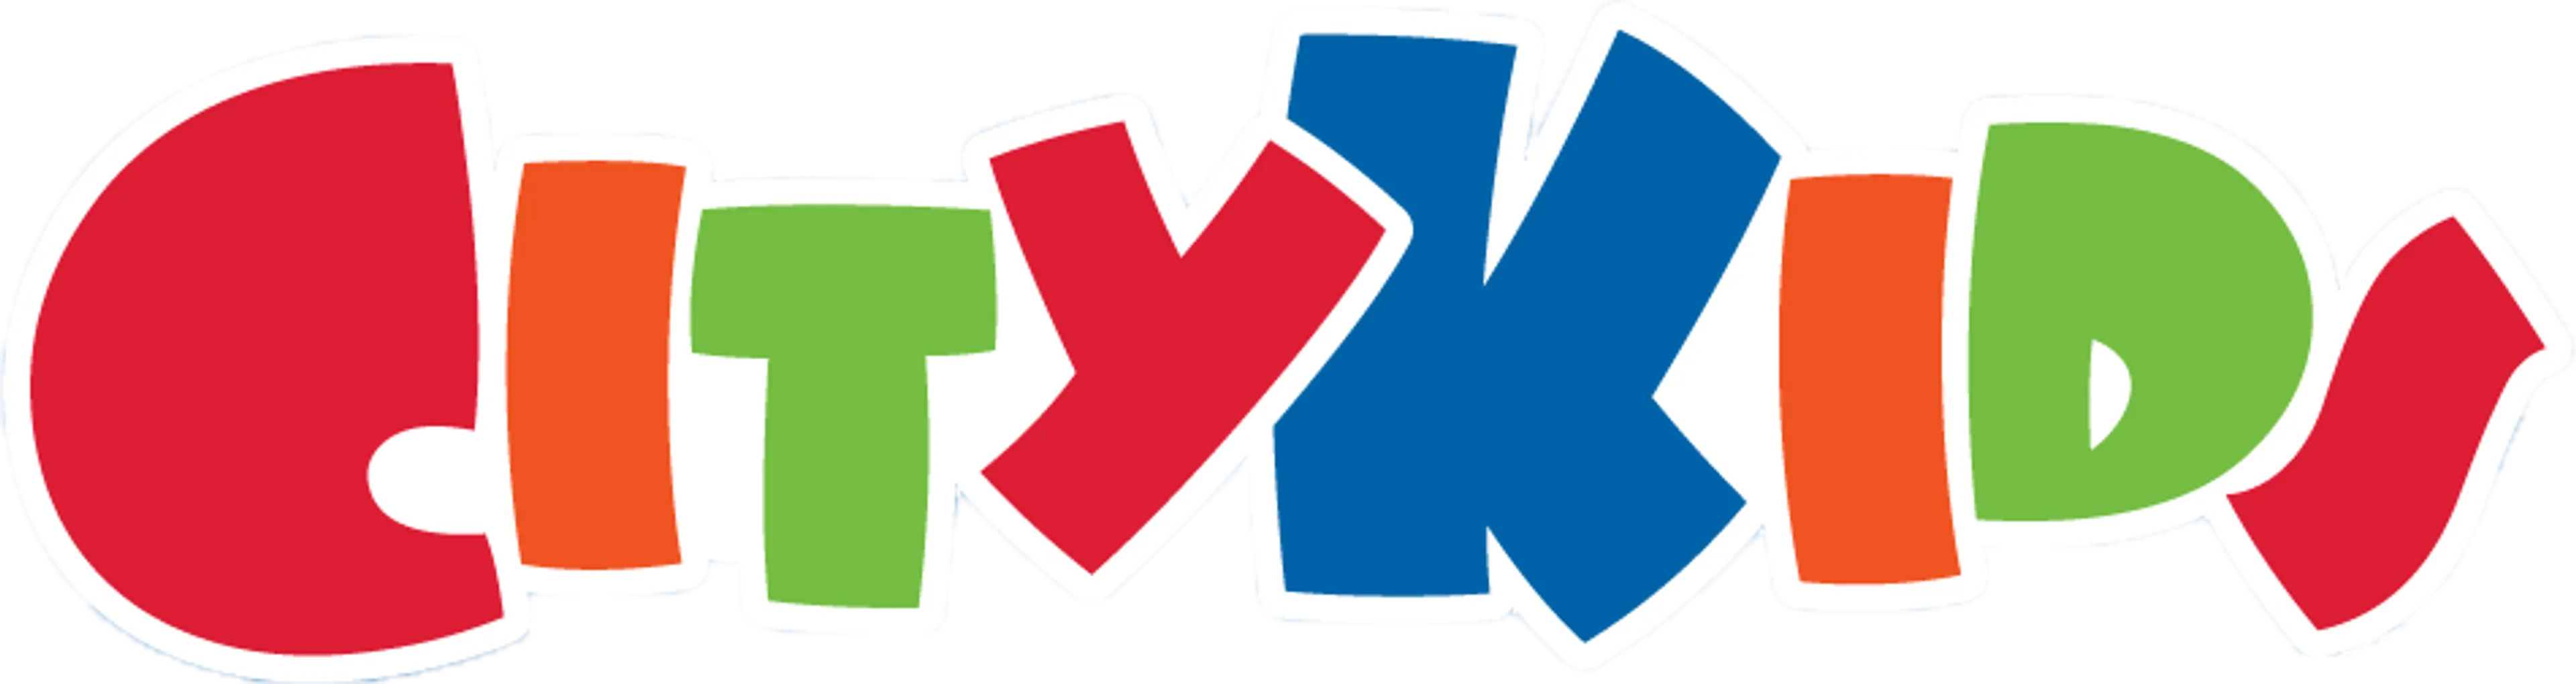 City Kids logo